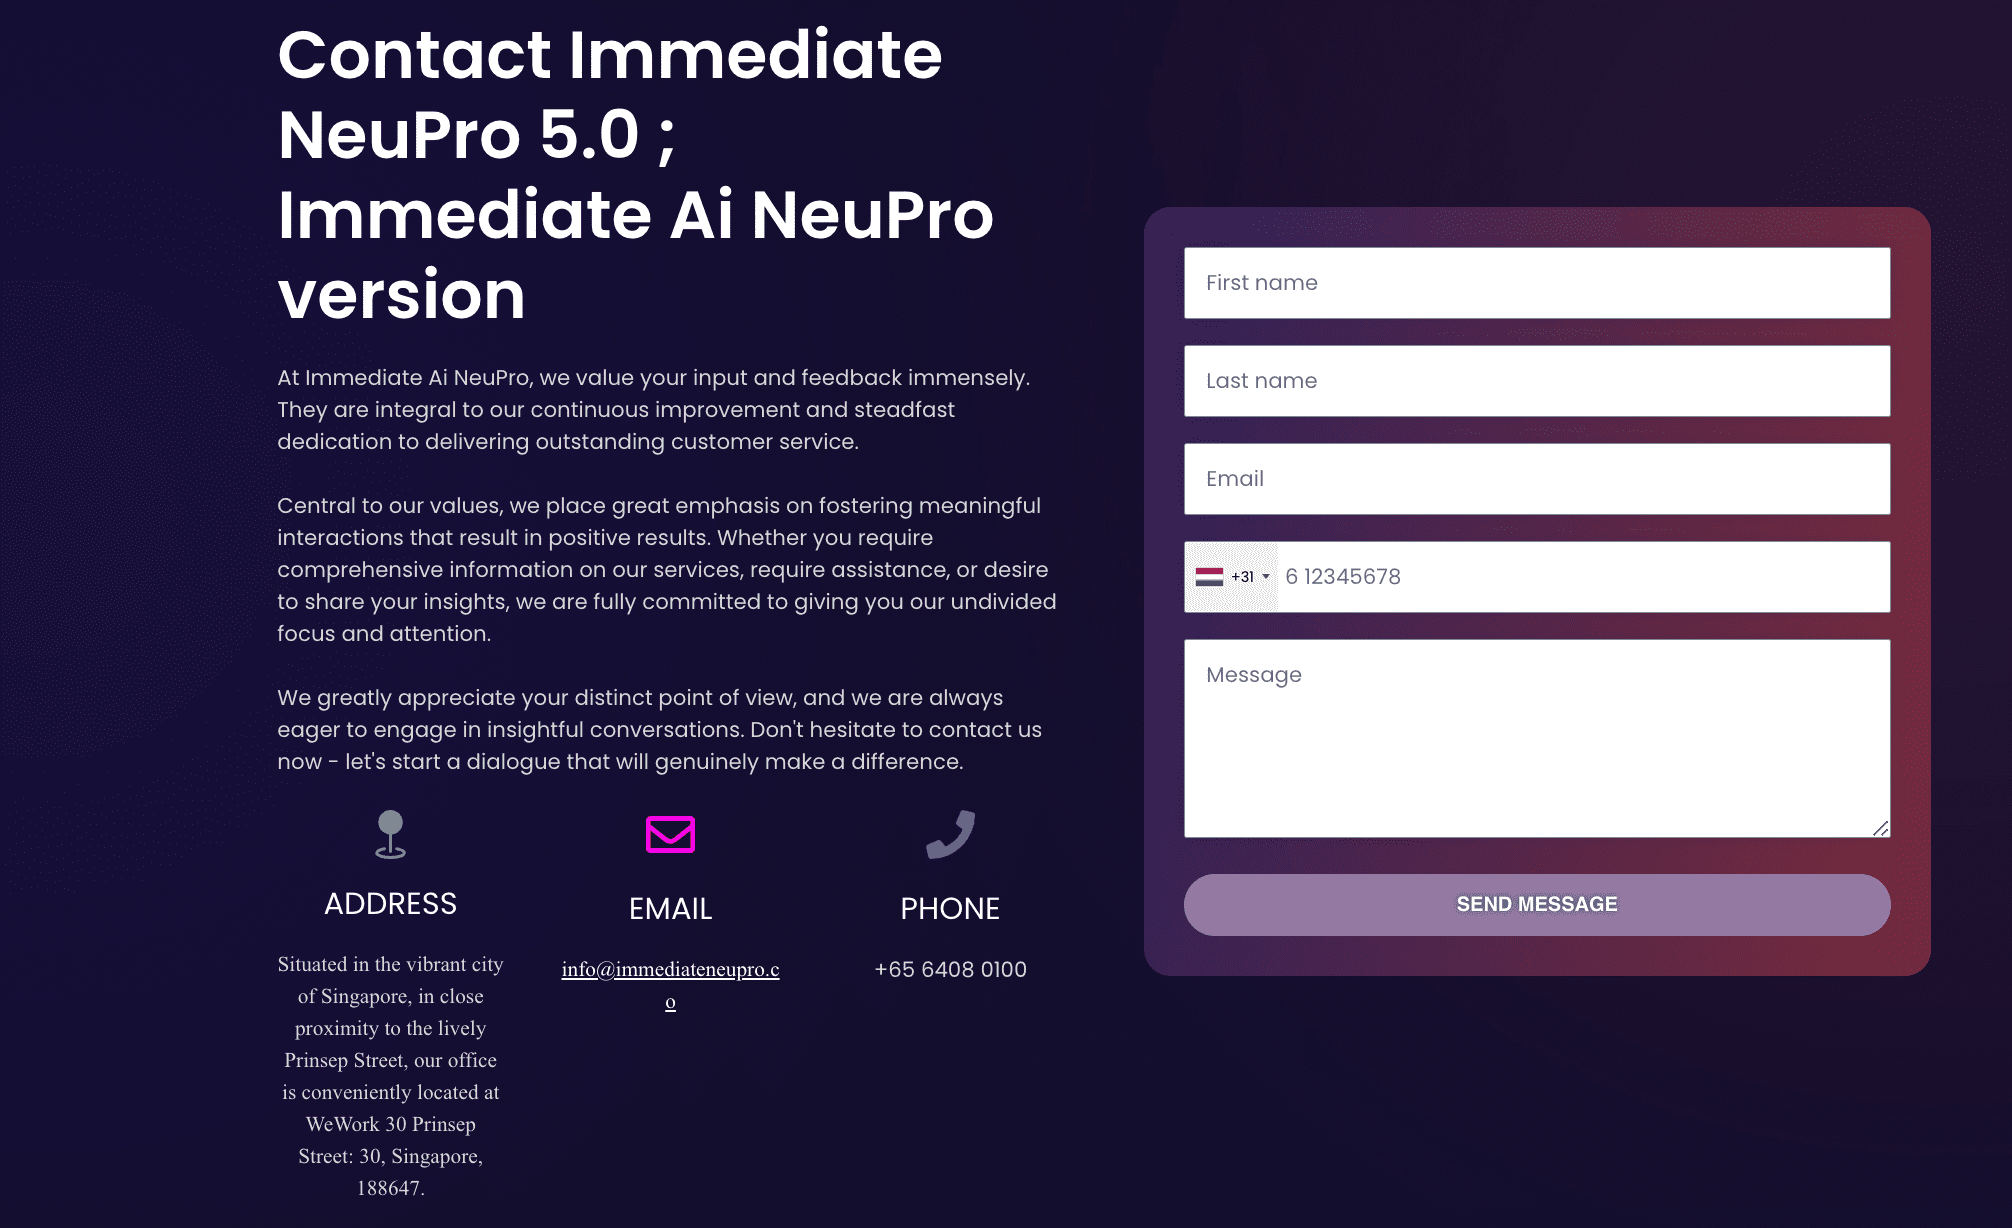 Immediate 1X Neupro (A1) contact